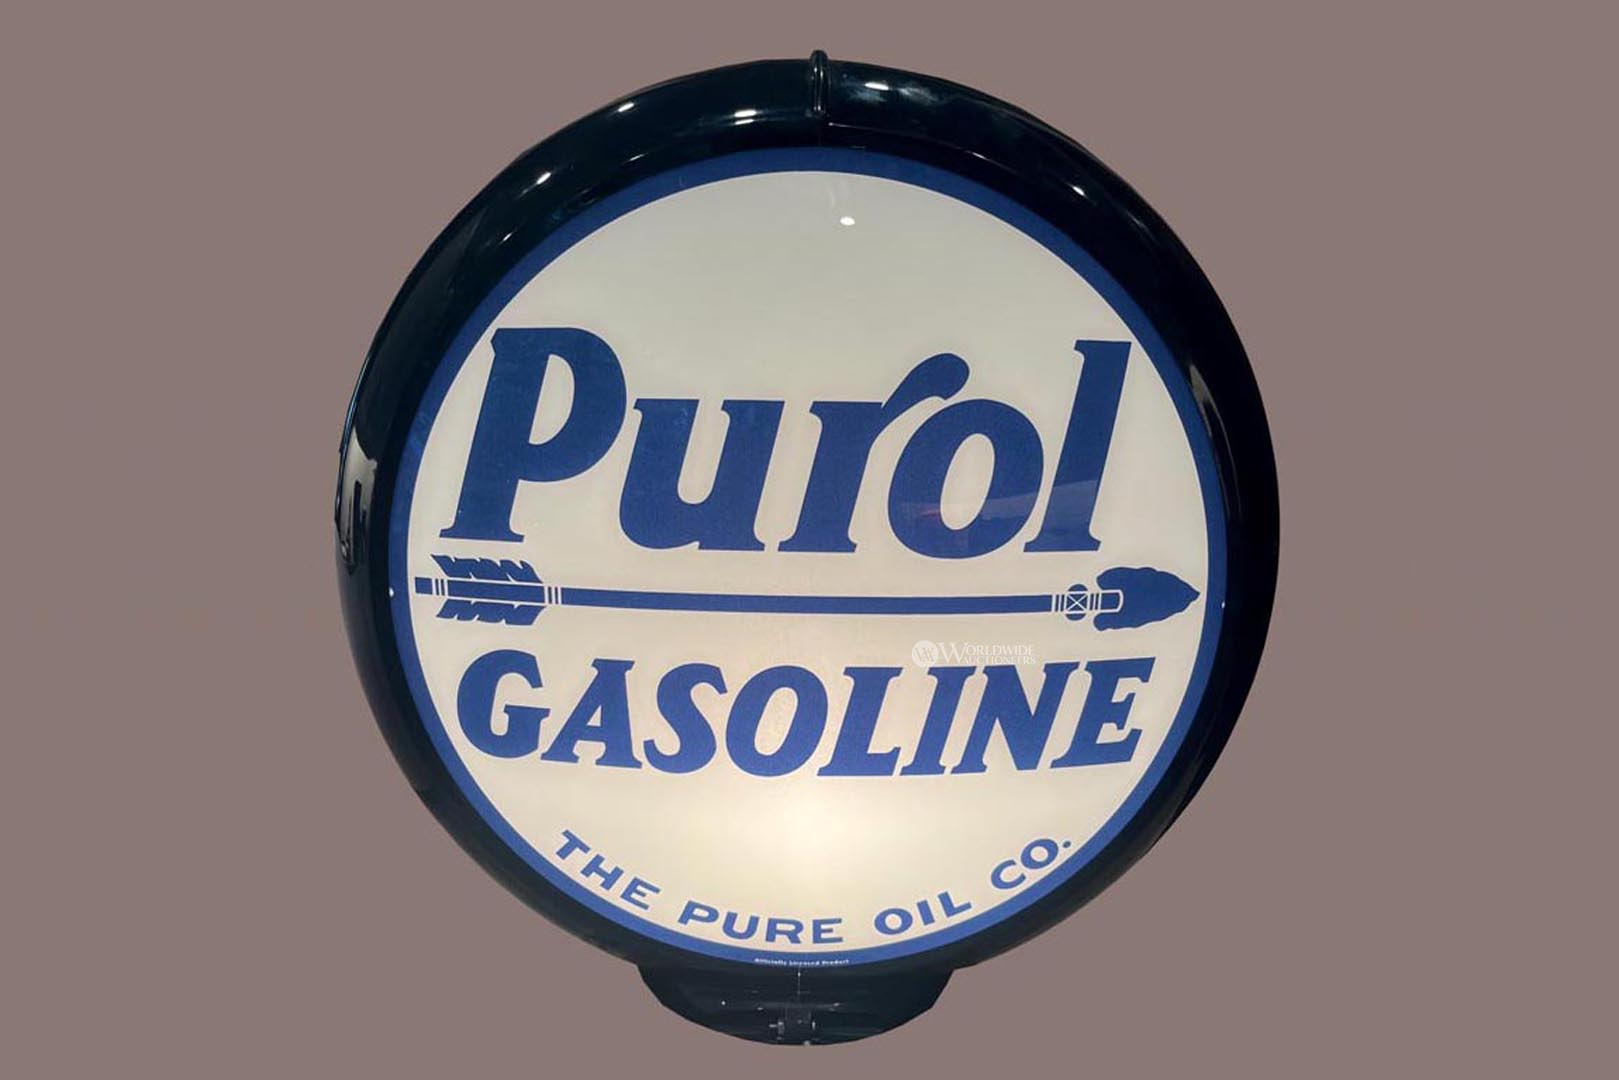 Purol Gasoline Gas Globe - Reproduction